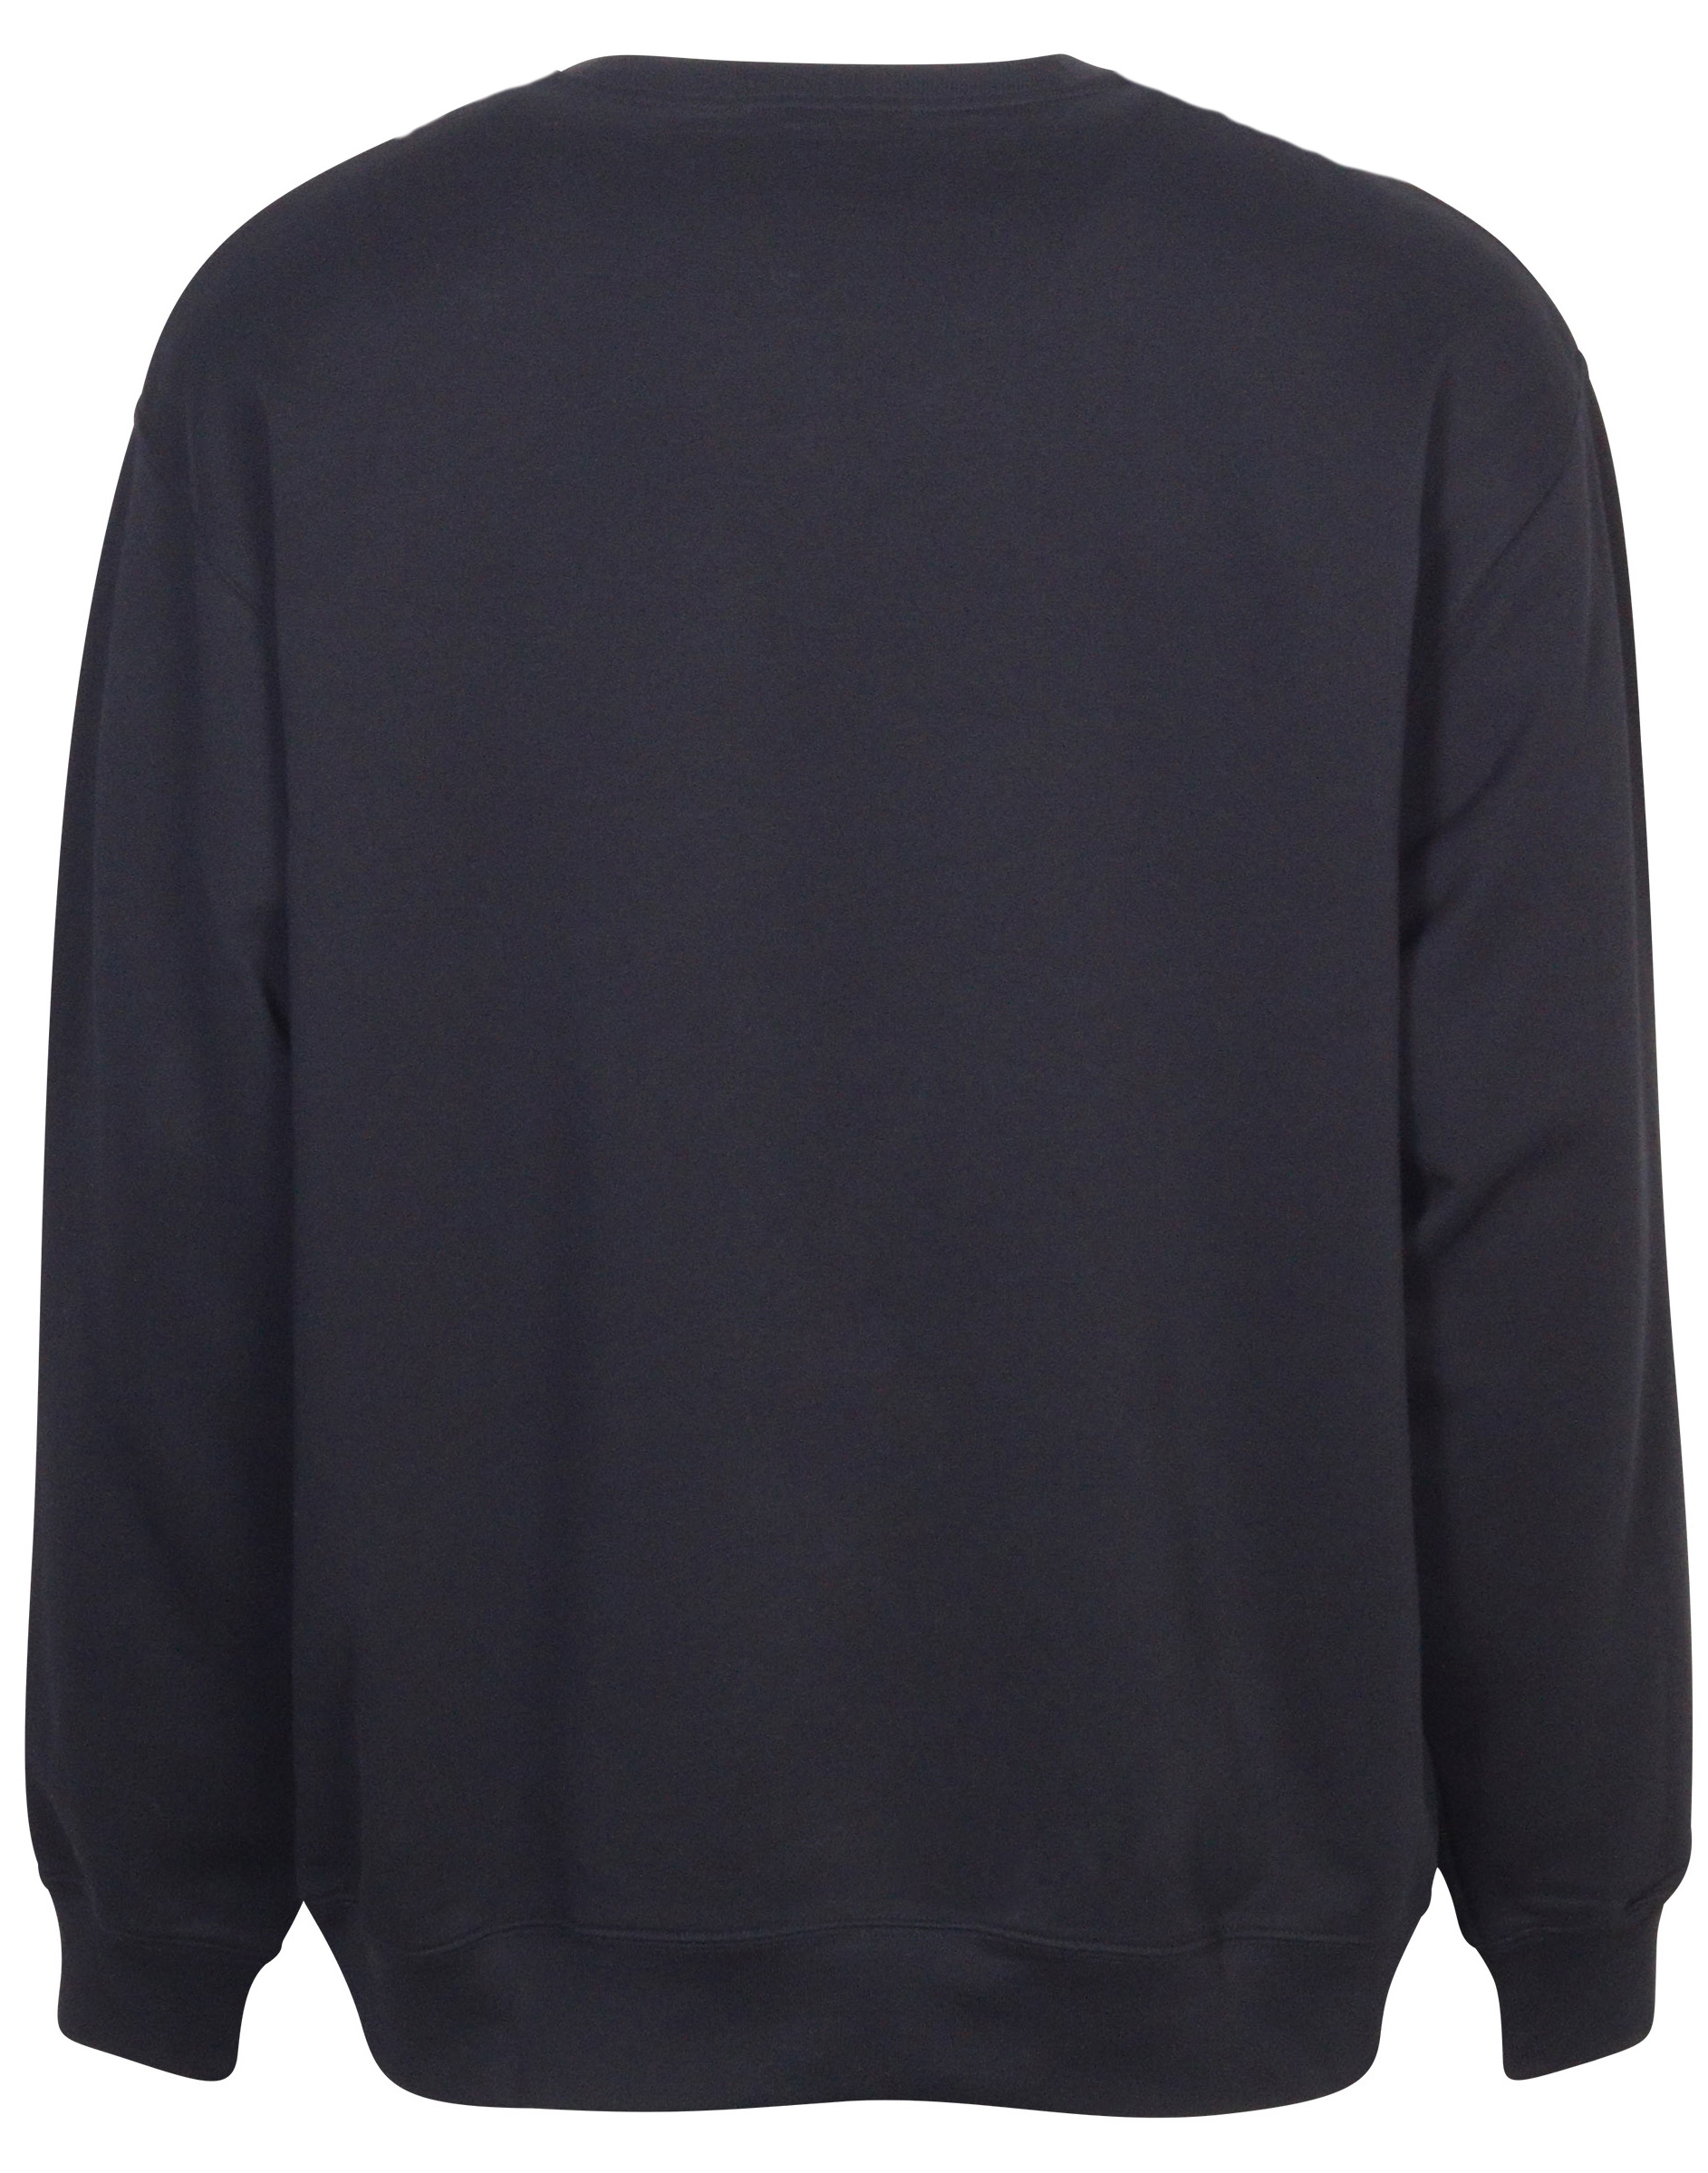 Unisex Acne Studios Sweatshirt Forba Face Black S